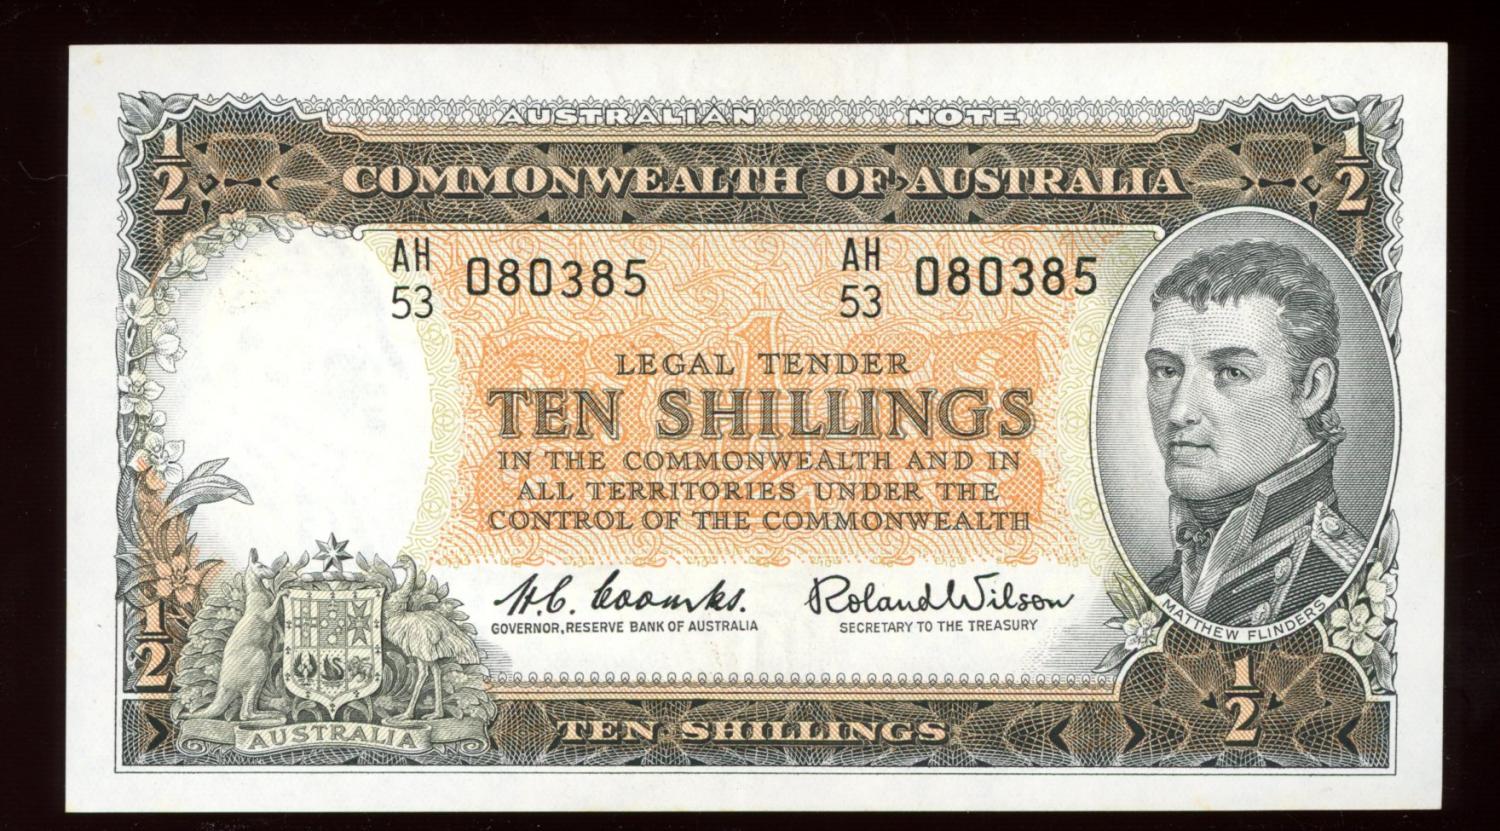 Thumbnail for 1961 Ten Shilling Note AH53 080385 EF